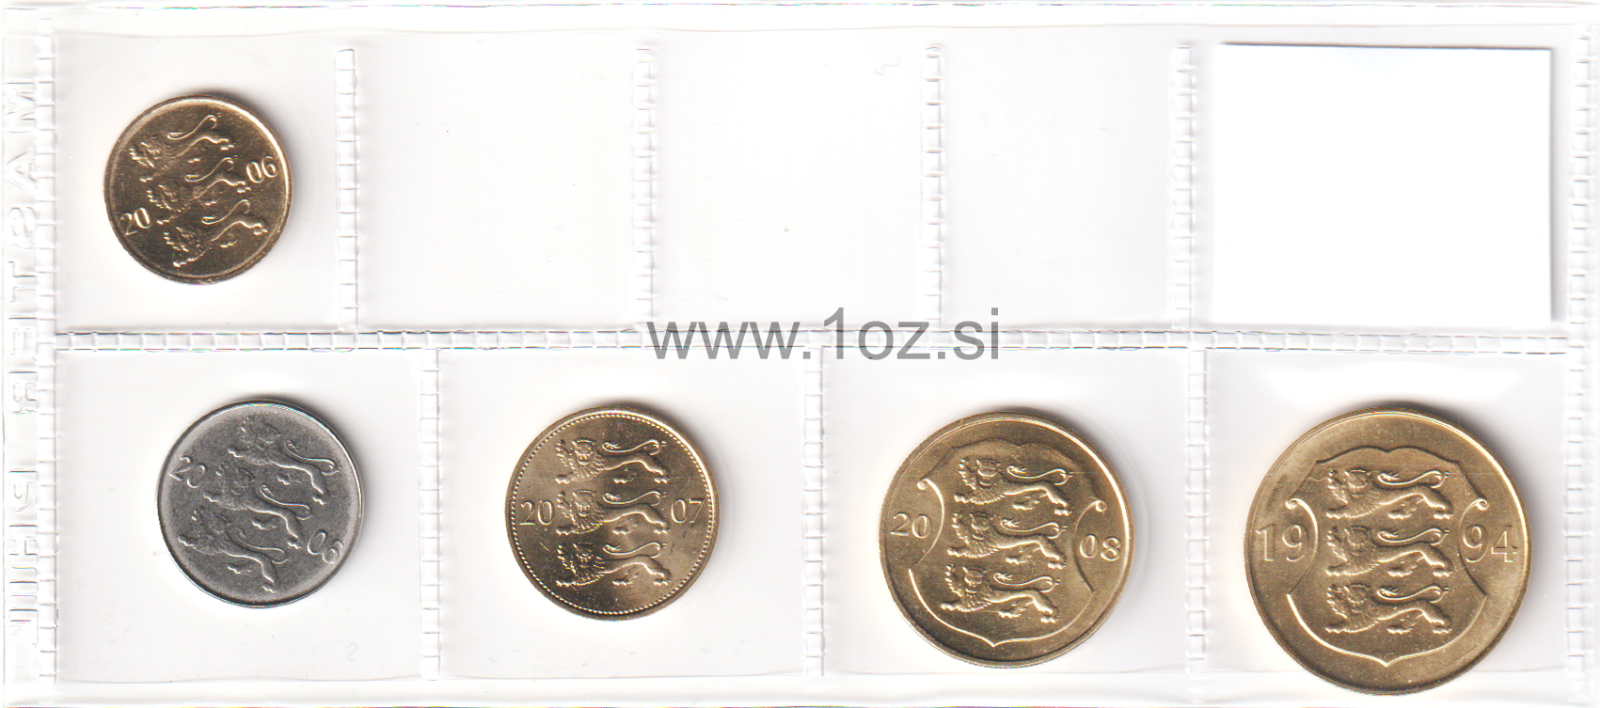 ESTONIA SET 1994 / 2008 - 5 coins (10, 20, 50 SENTI + 1, 5 KROONI) UNCIRCULATED Без бренда - фотография #2